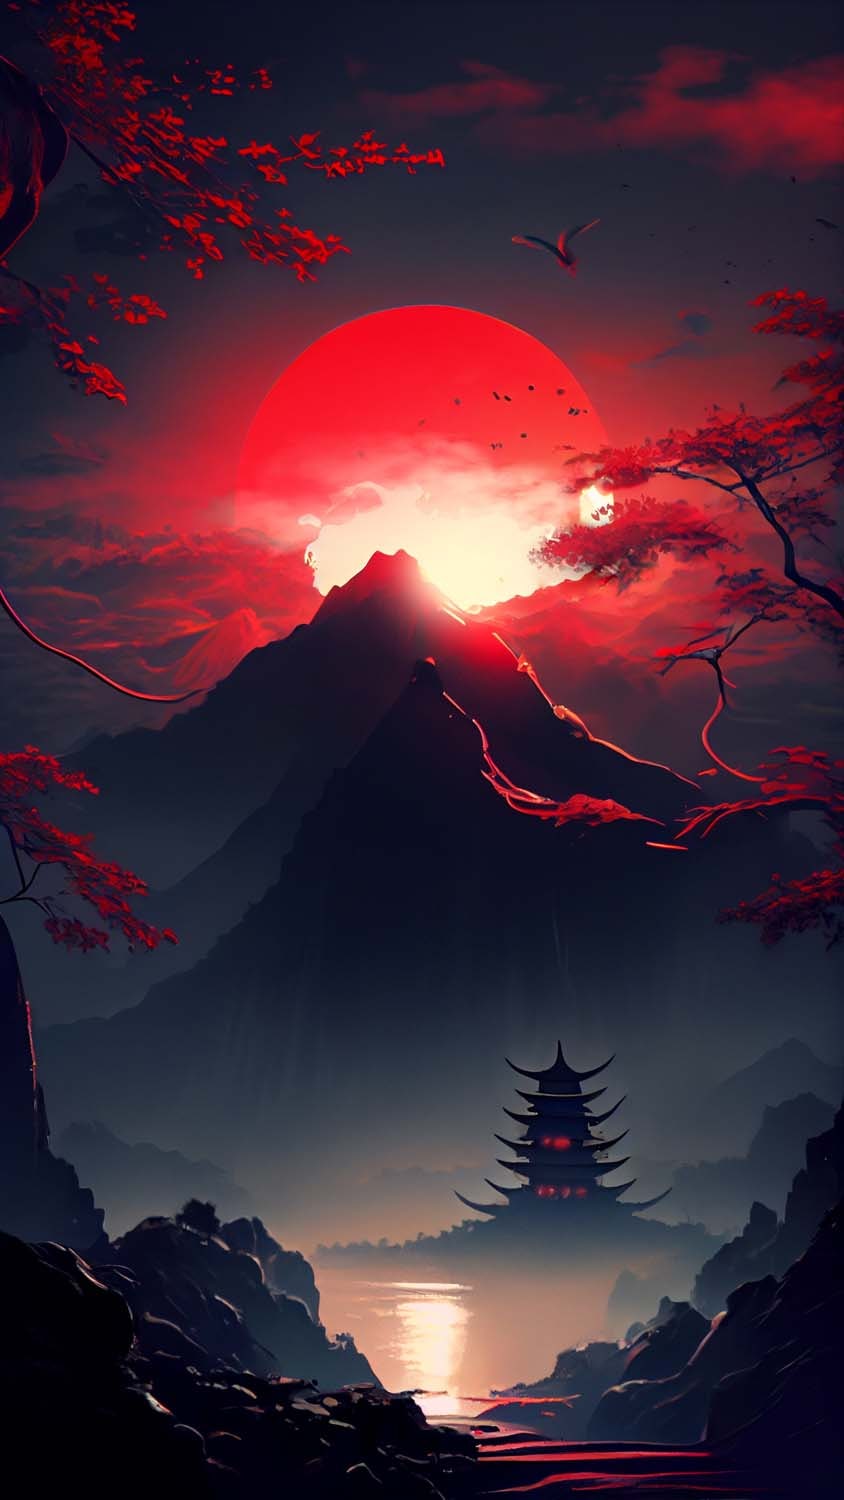 Alone Samurai shadow on red moon 8K wallpaper download